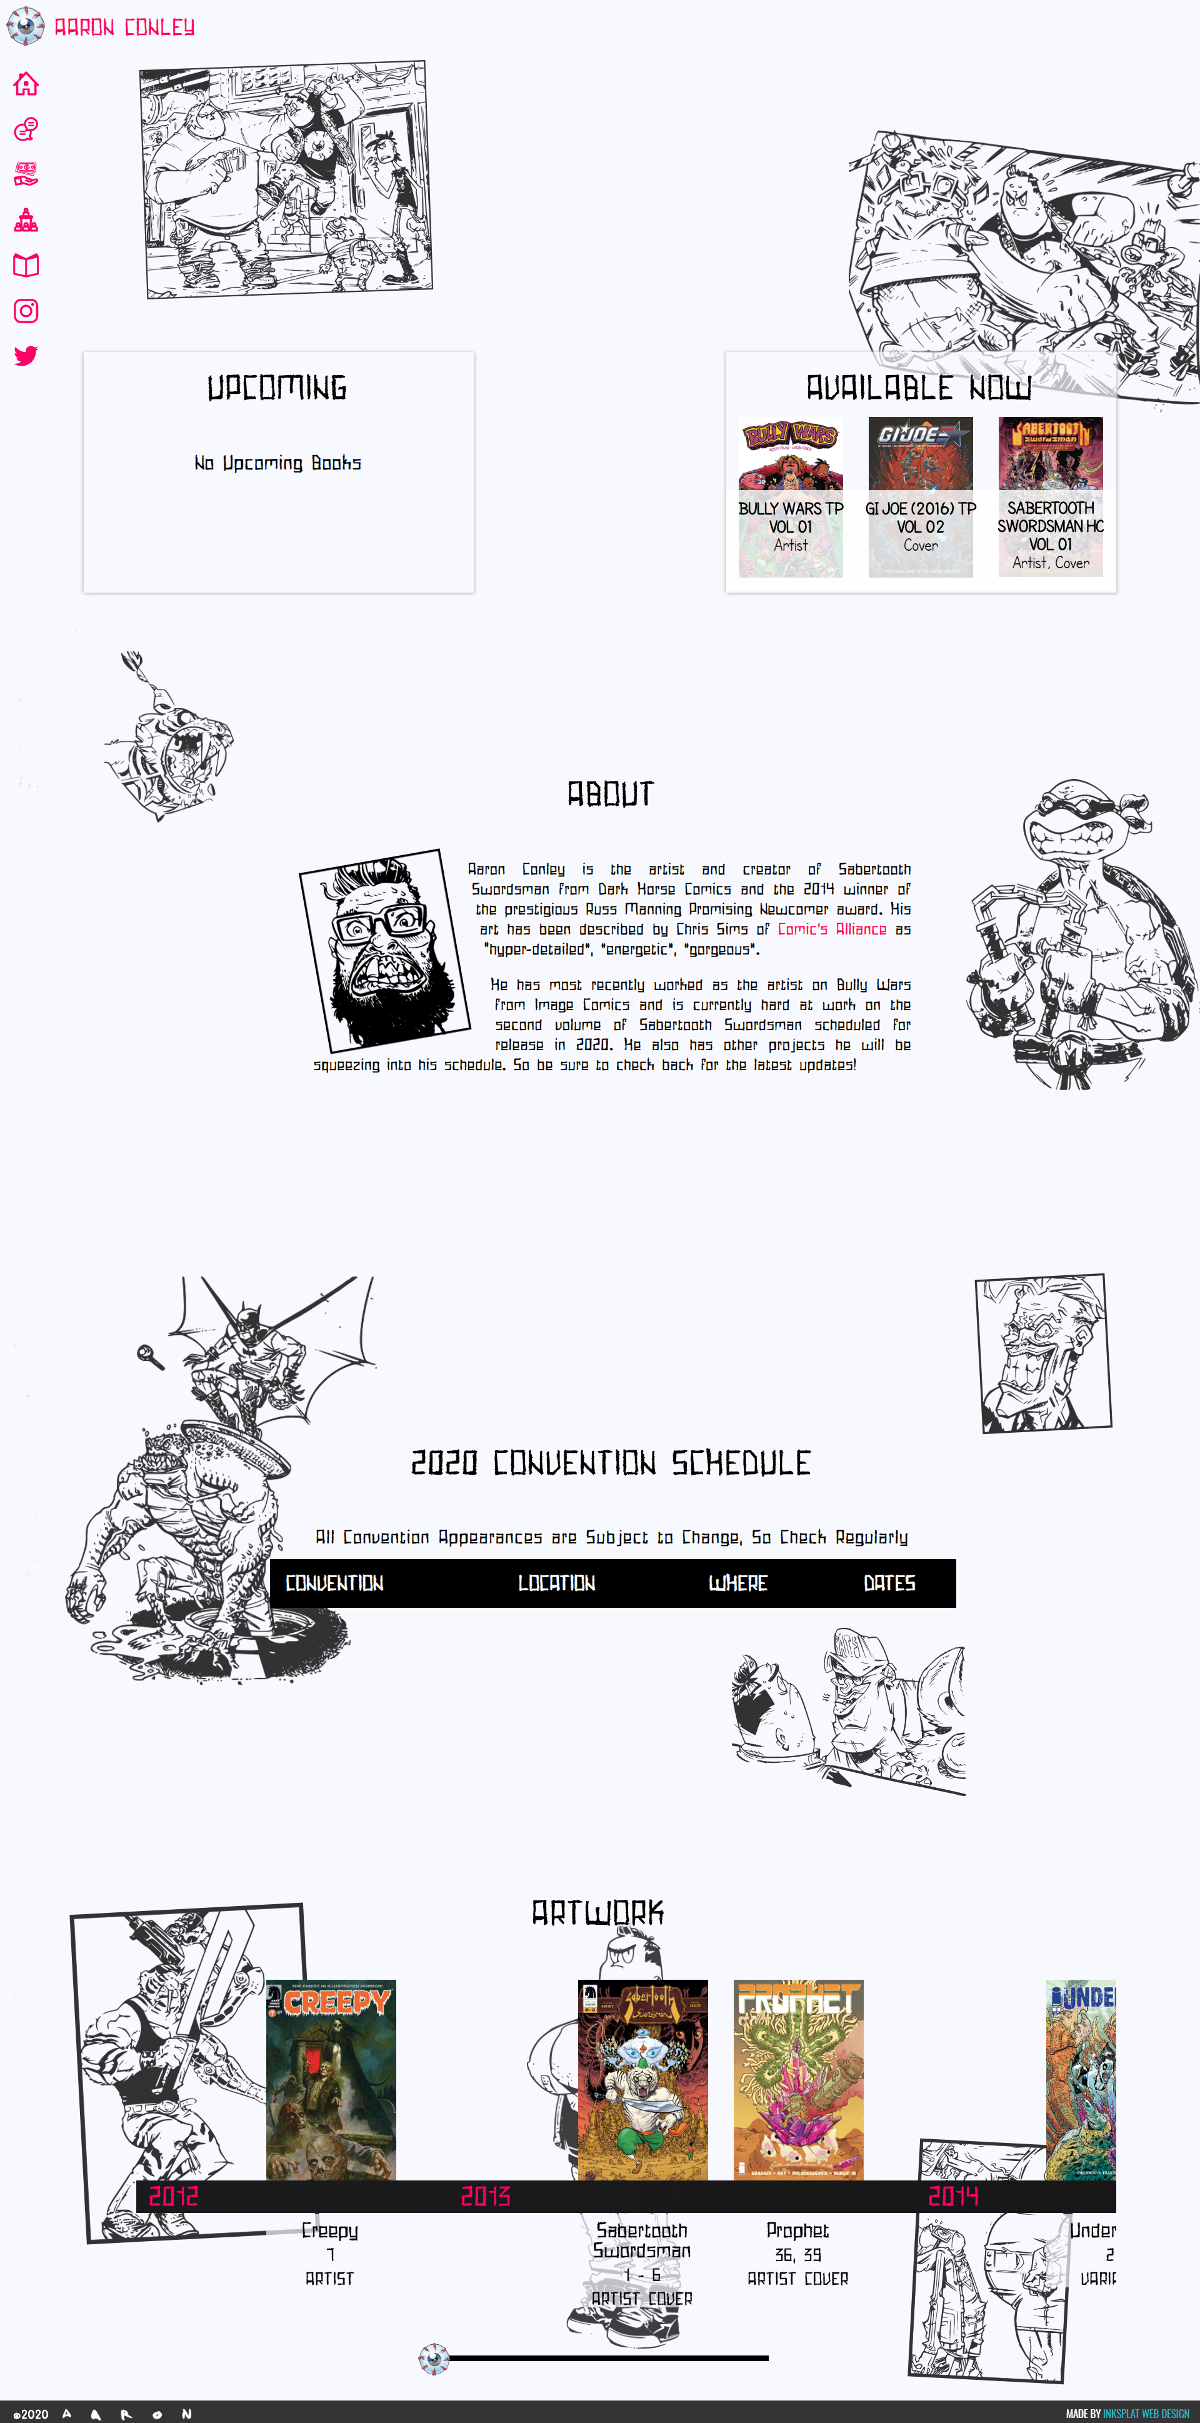 Comic book artist portfolio web design Dublin